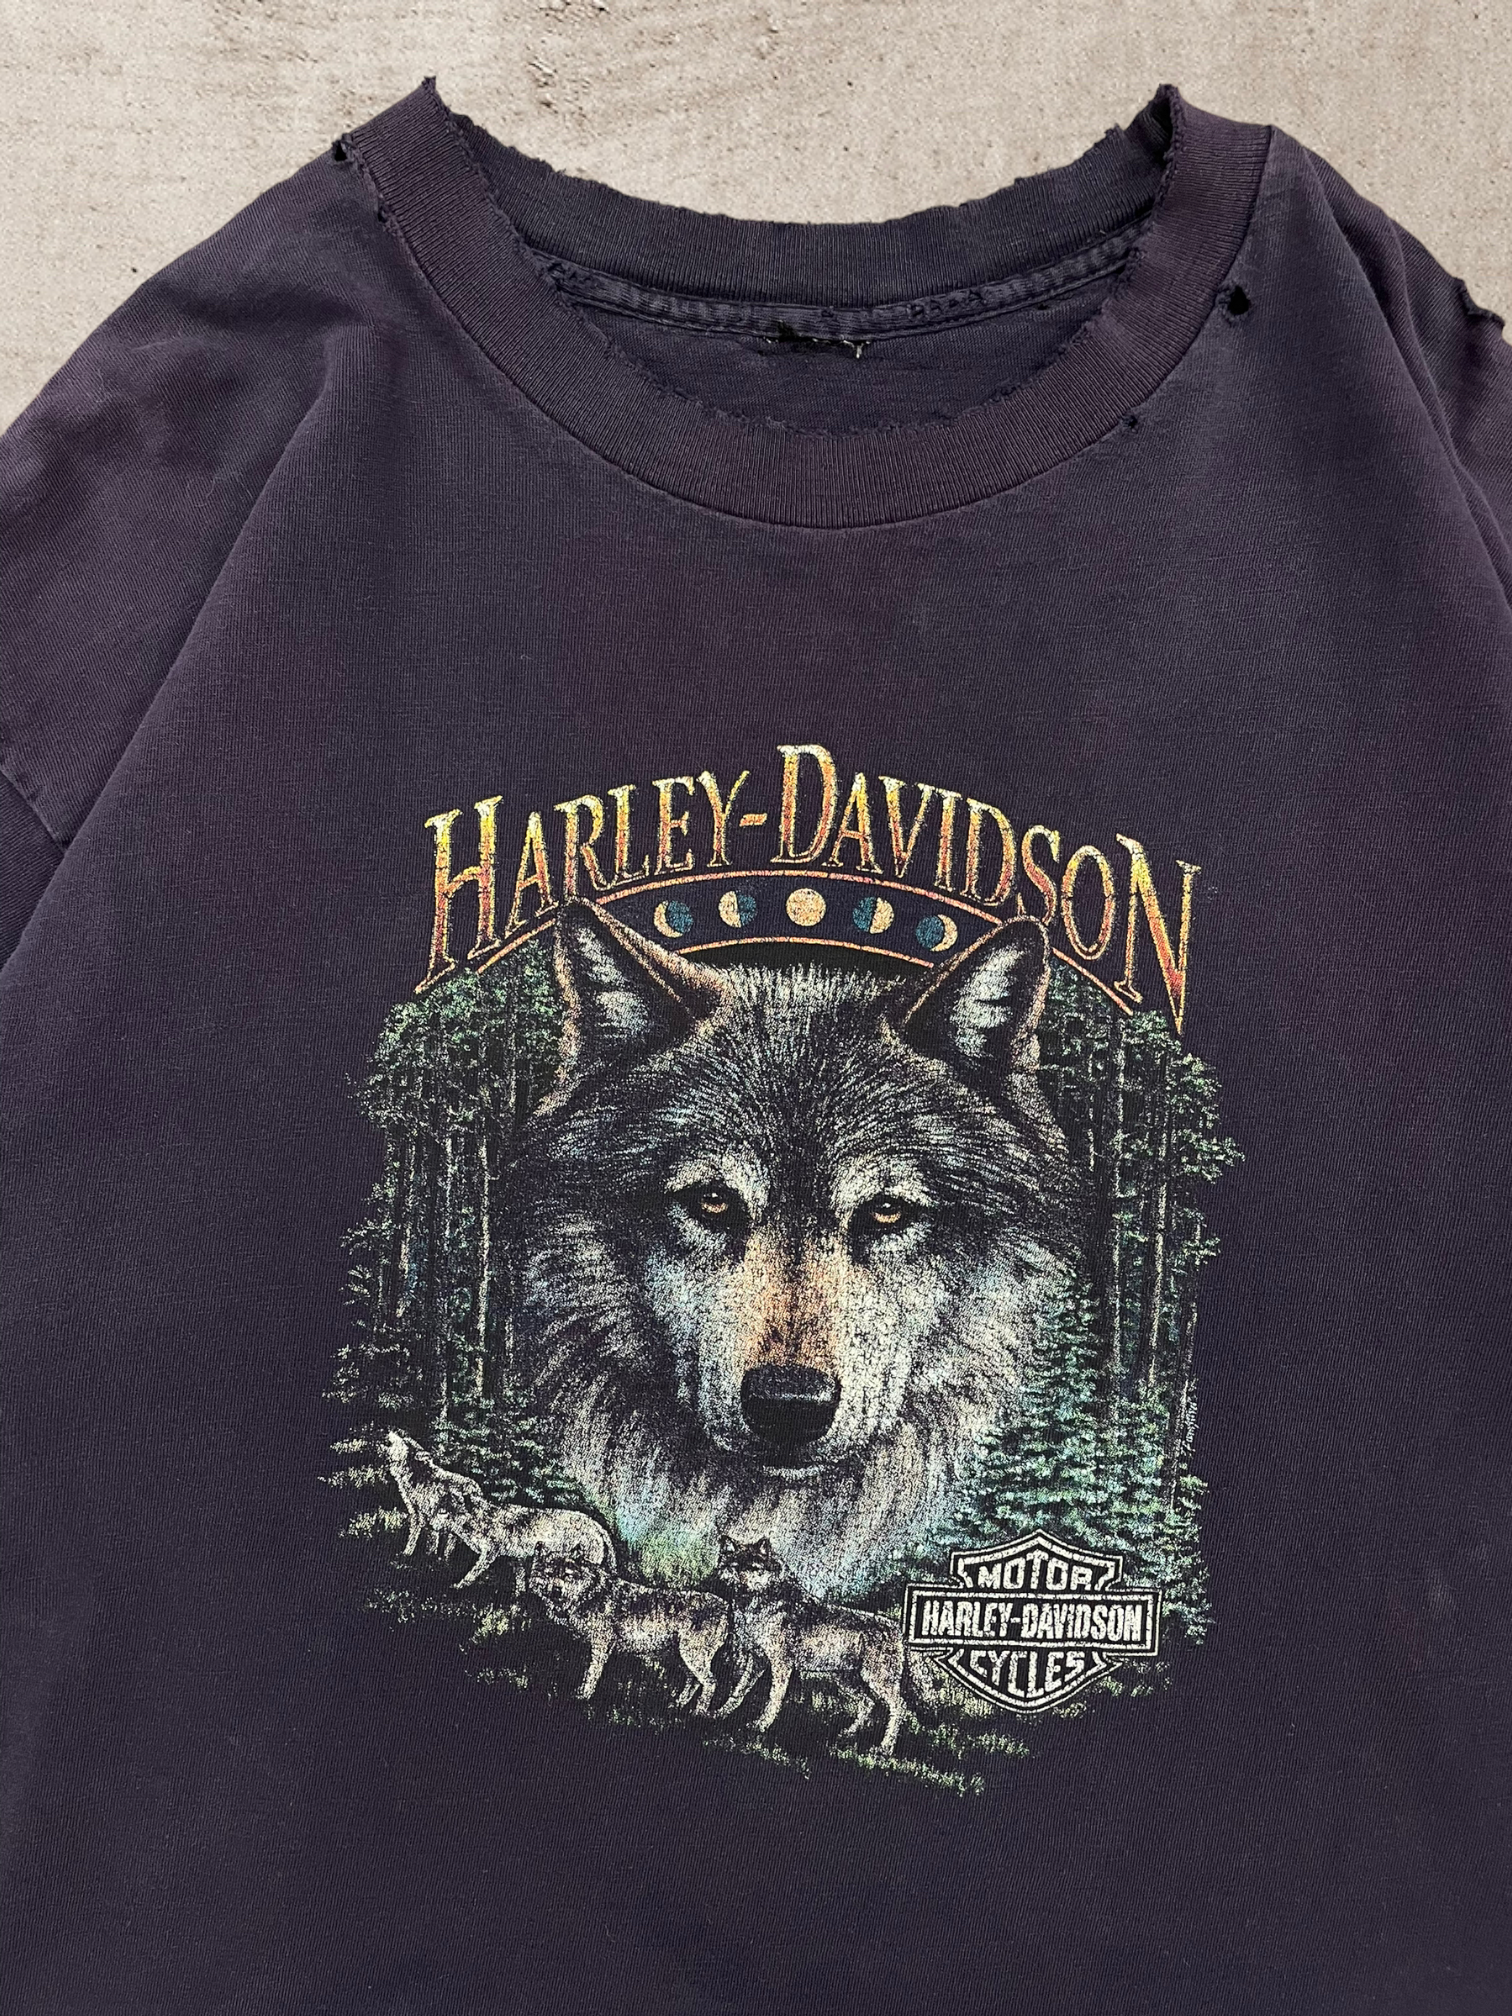 90s Harley Davidson Distressed T-Shirt - XL